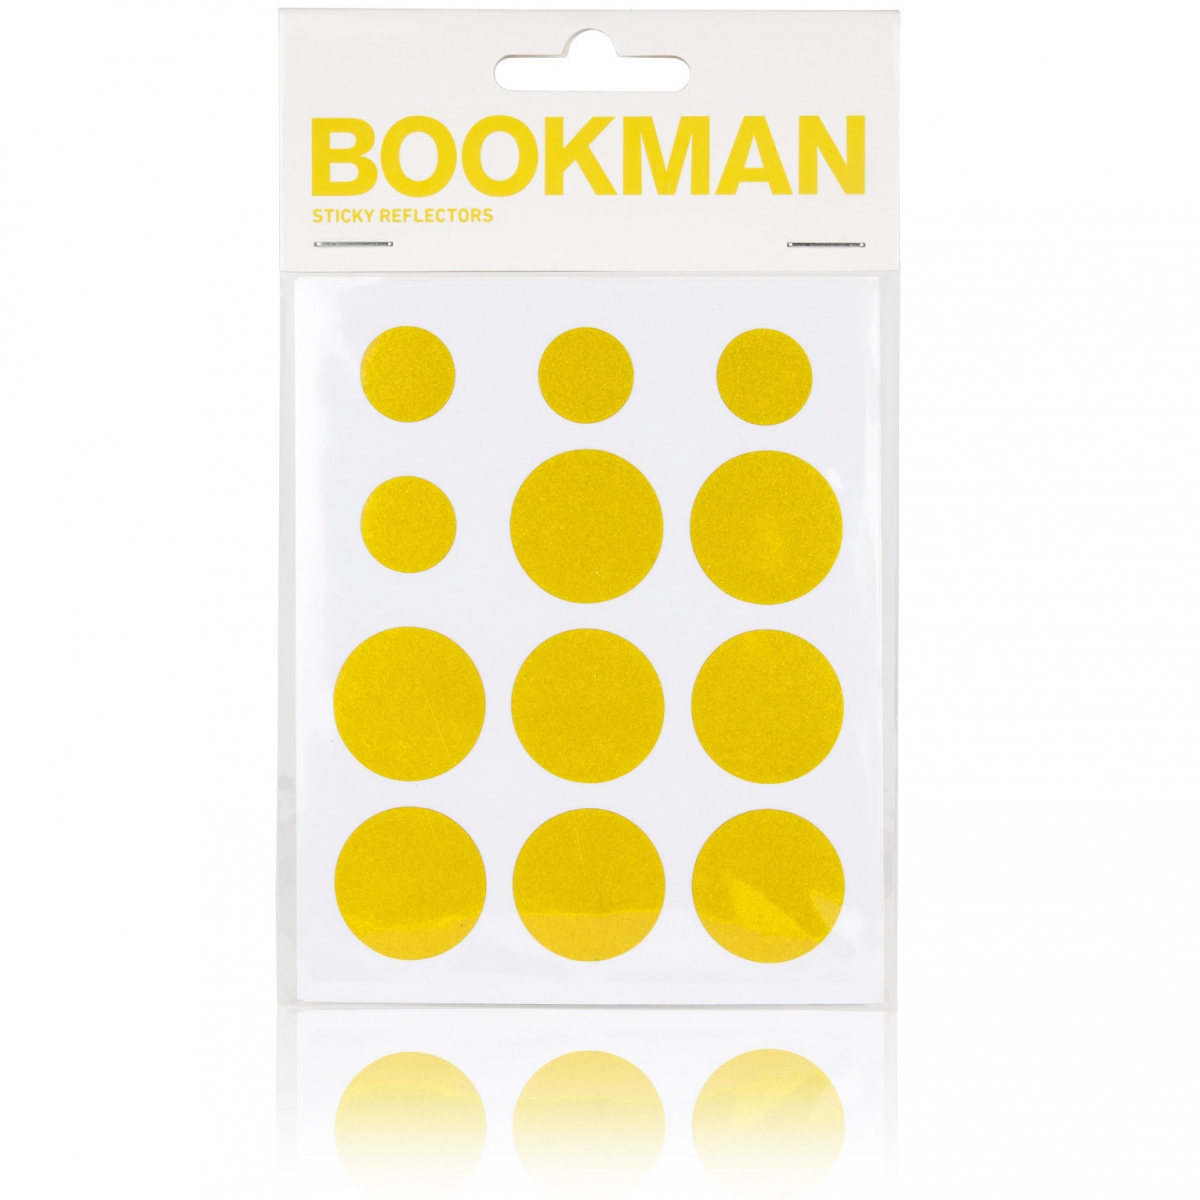 bookman-samolepici-reflexni-odrazky-red-od-bookman-2.jpg